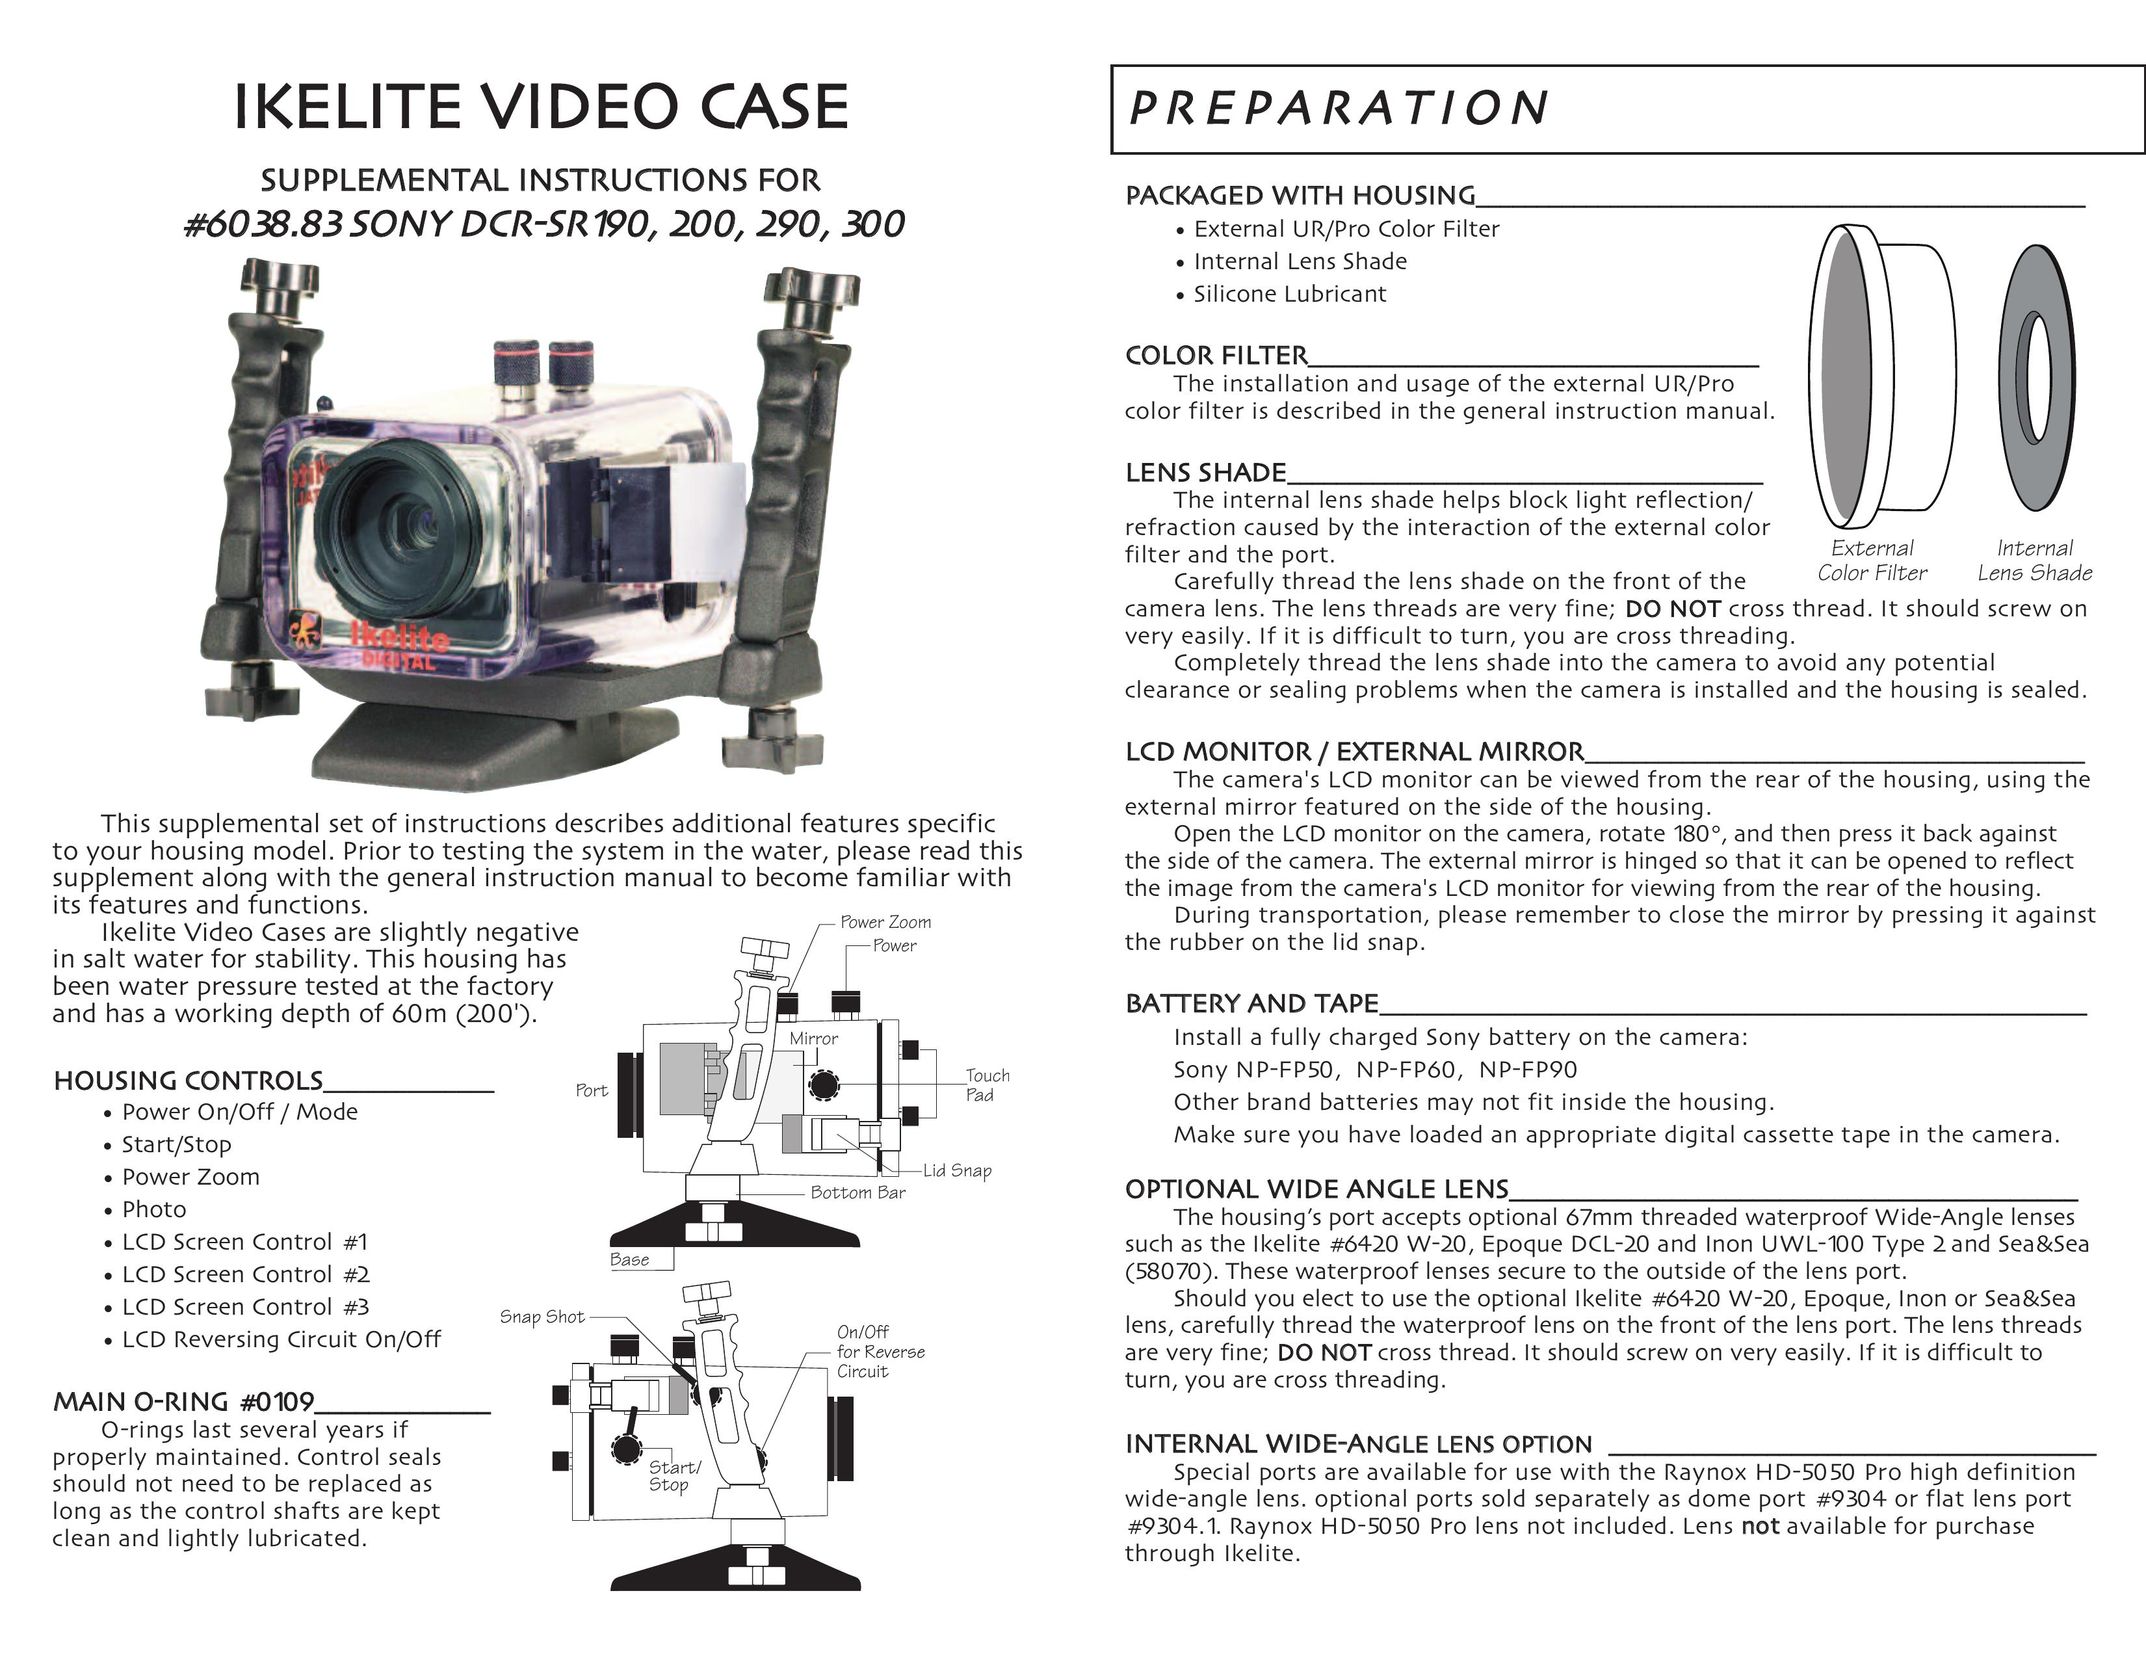 Ikelite DCR-SR200 Carrying Case User Manual